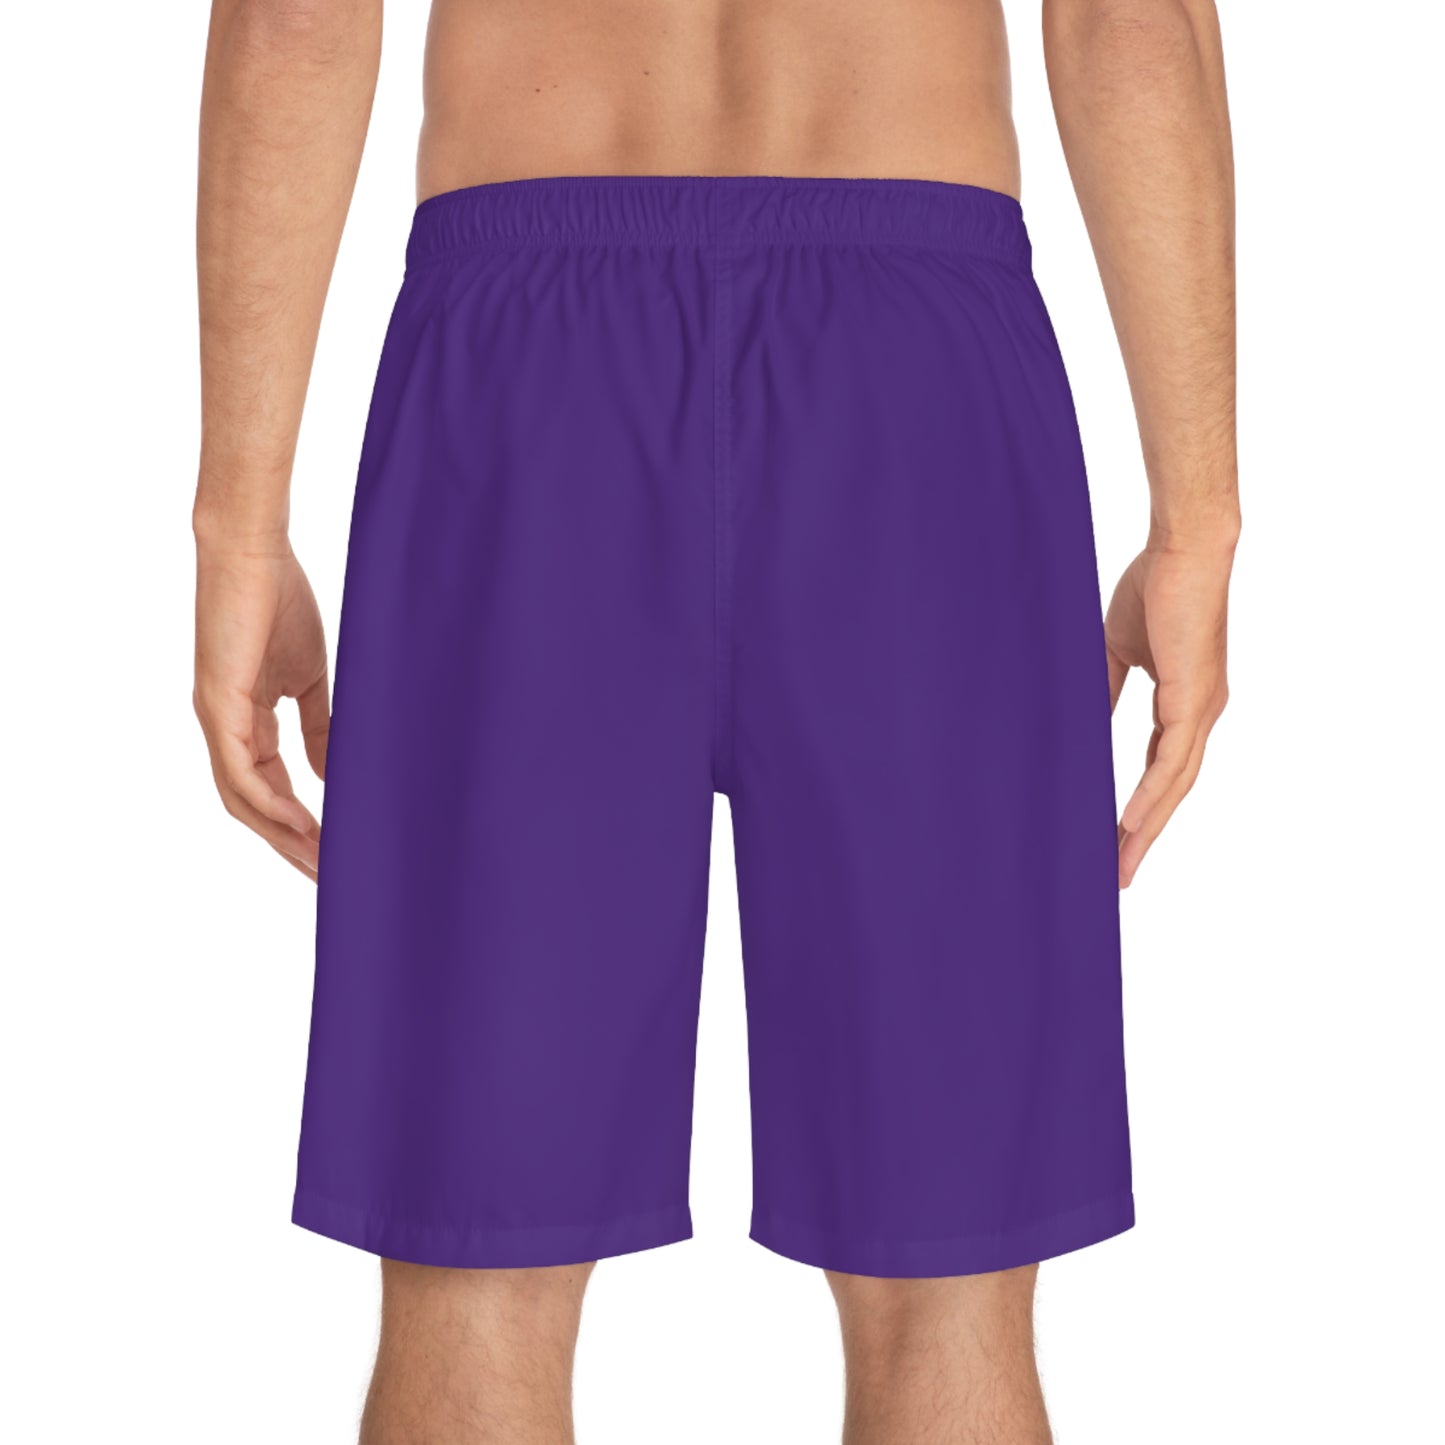 Grape Shorts